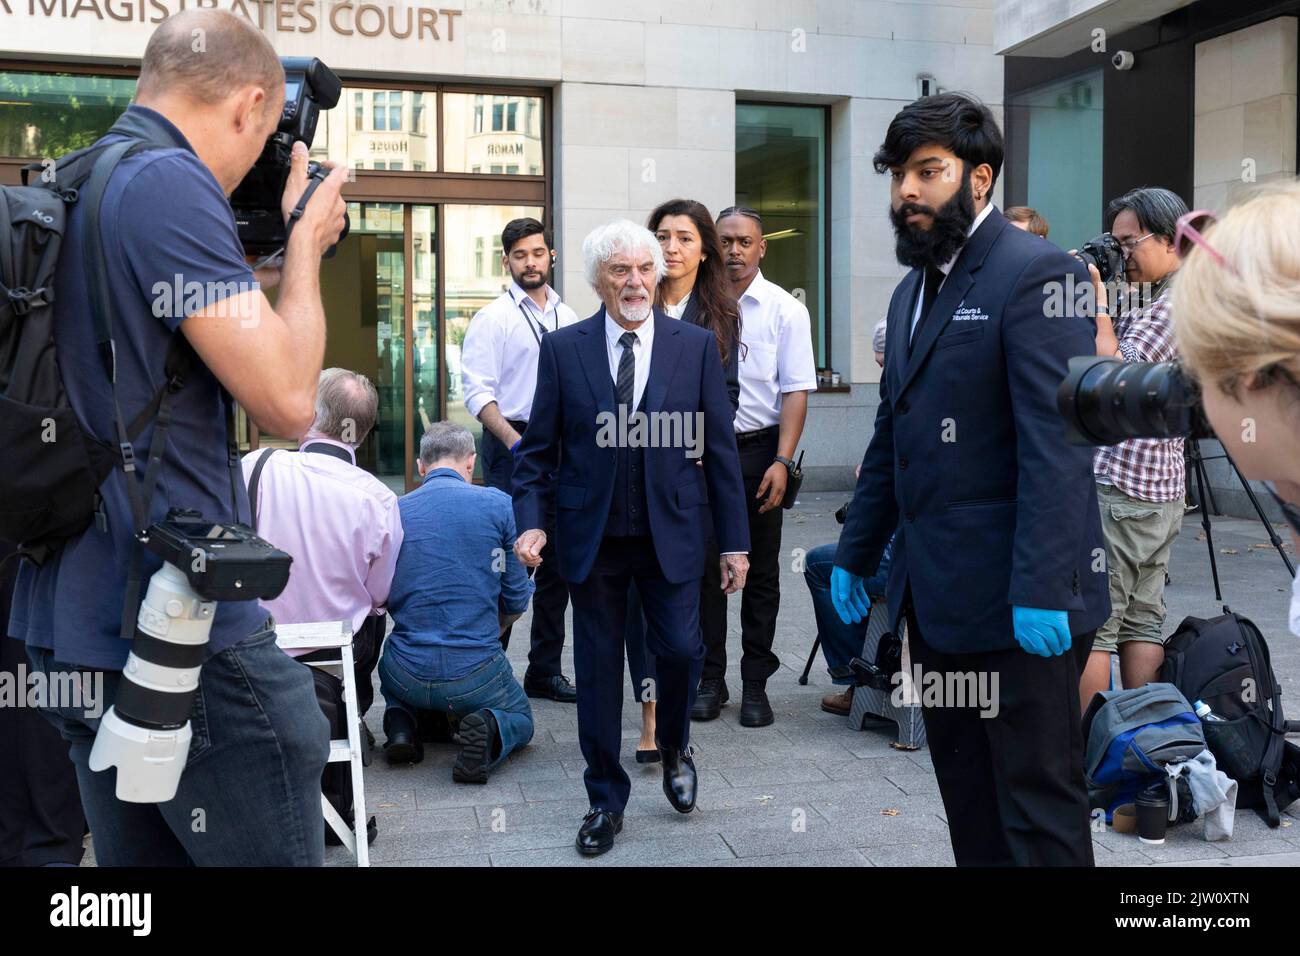 Bernie Ecclestone lascia Westminster Magistrates Court questa mattina. Immagine scattata il 22nd ago 2022. © Belinda Jiao jiao.bilin@gmail.com 07598931257 Foto Stock